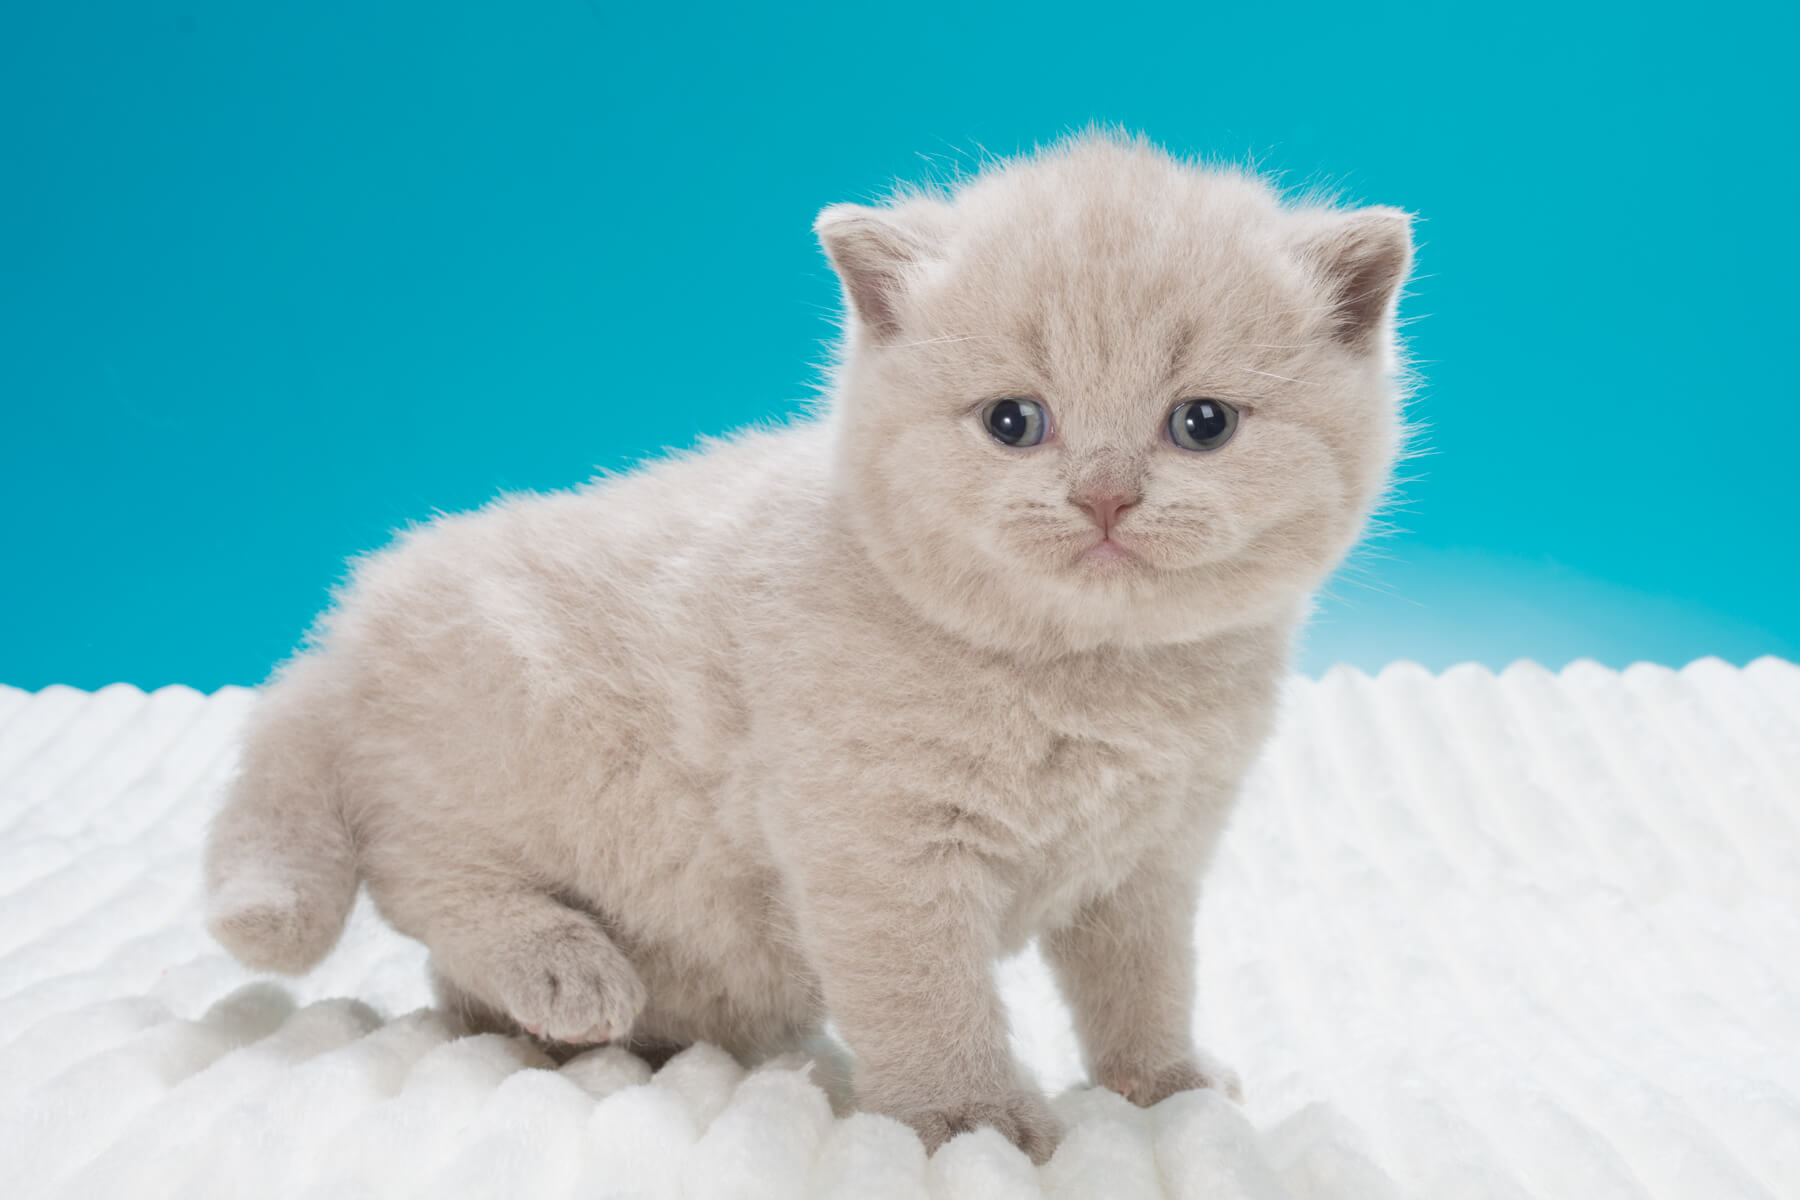 Фото британского голубого котёнка